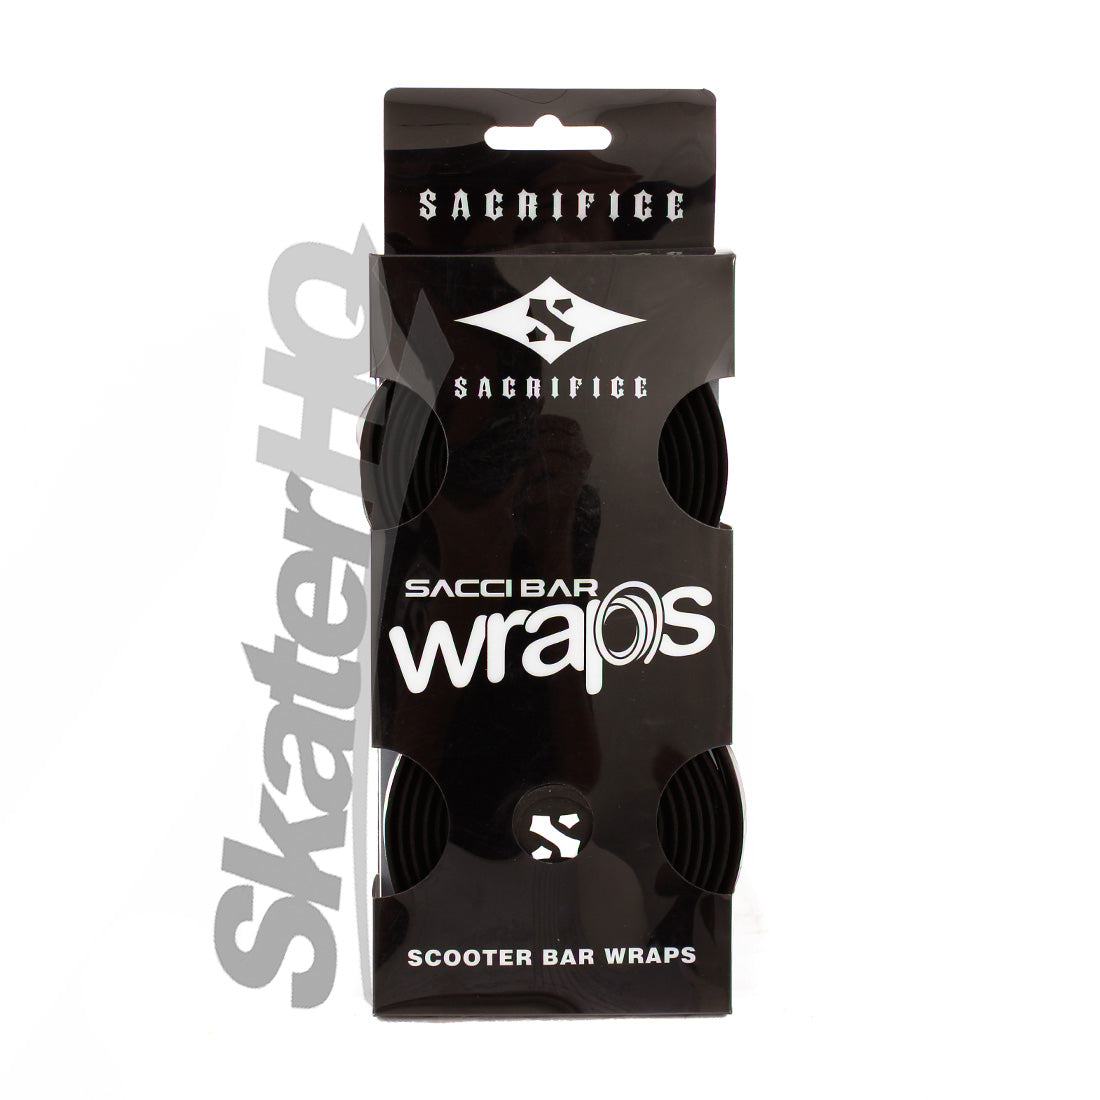 Sacrifice Sacci Bar Wrap - Black Scooter Grips